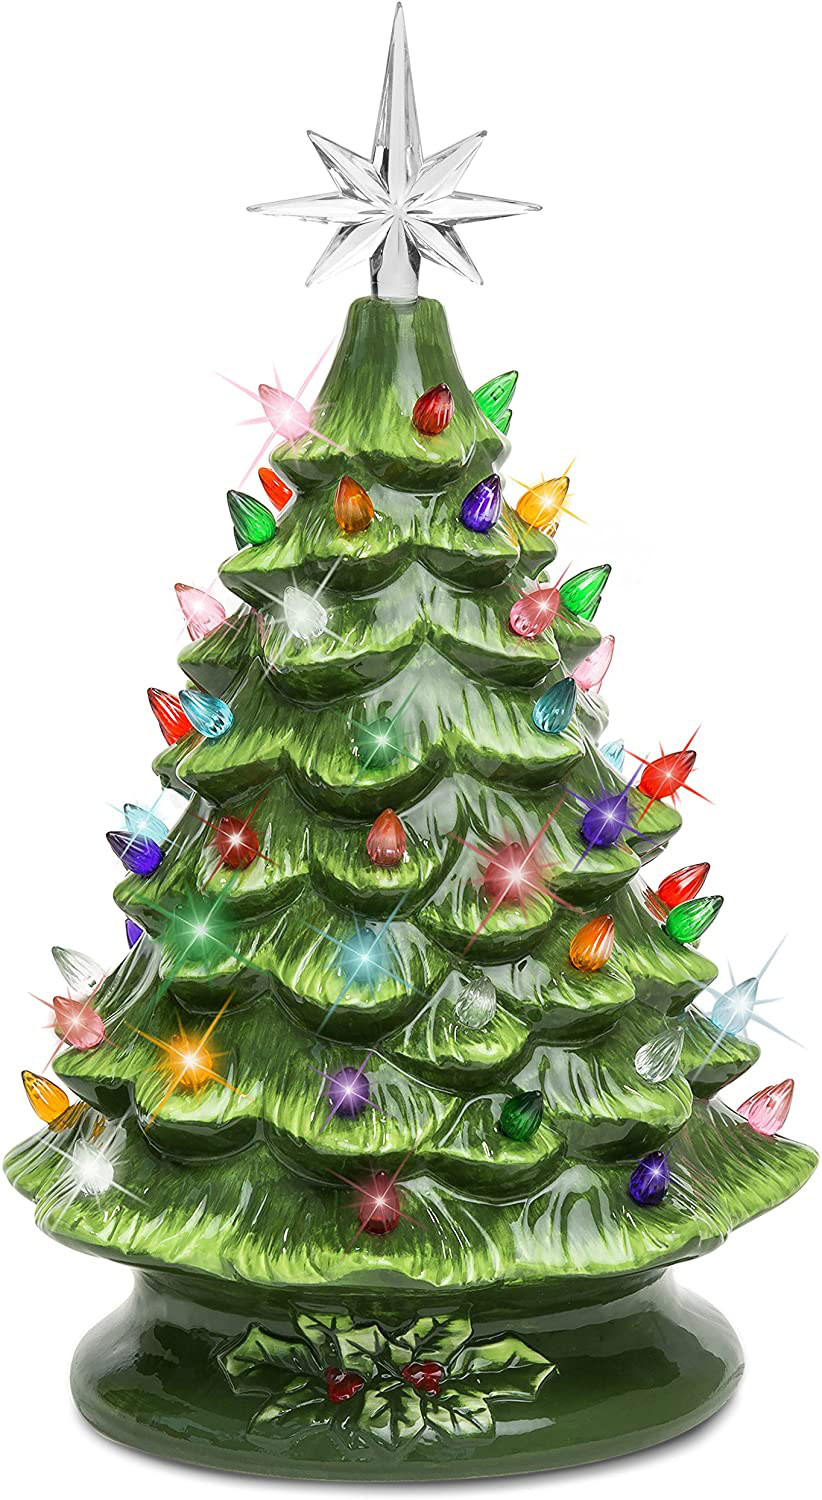 Green ceramic Christmas tree.